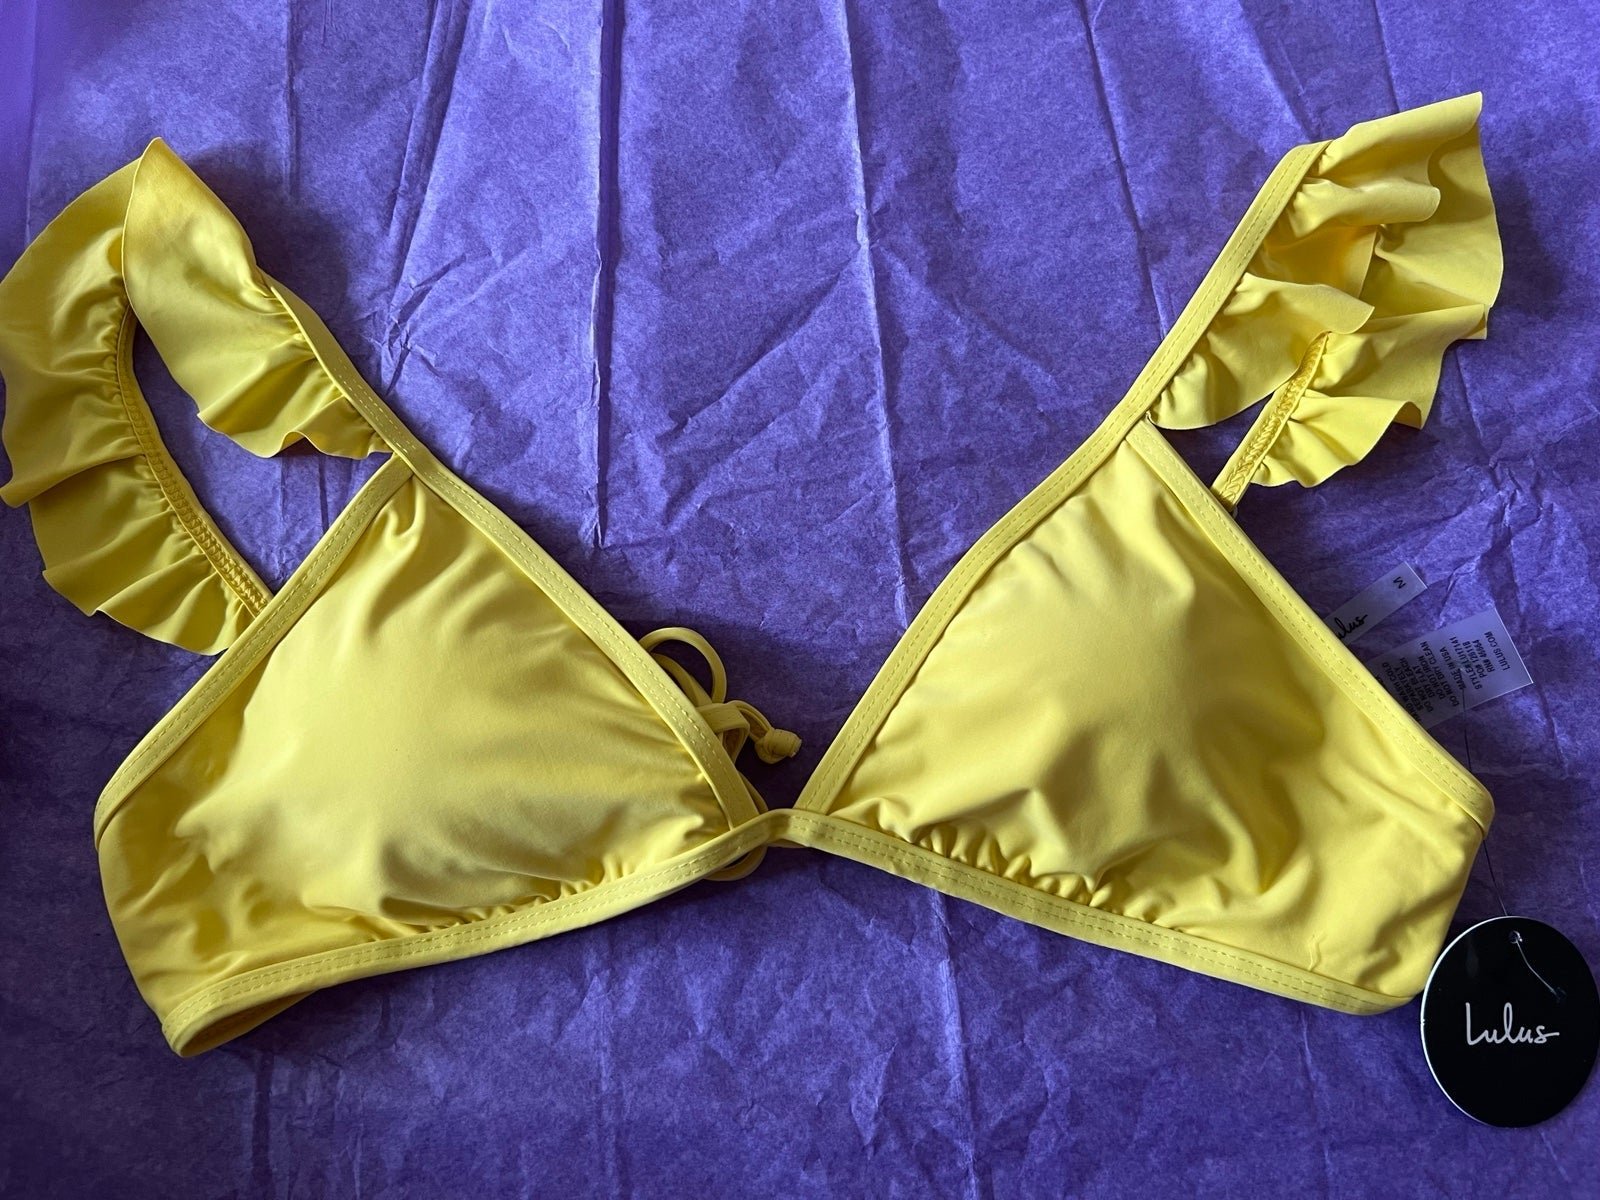 Stylish NWT Lulus Vibrant Yellow Bikini Top mzpUZ76Mb Buying Cheap